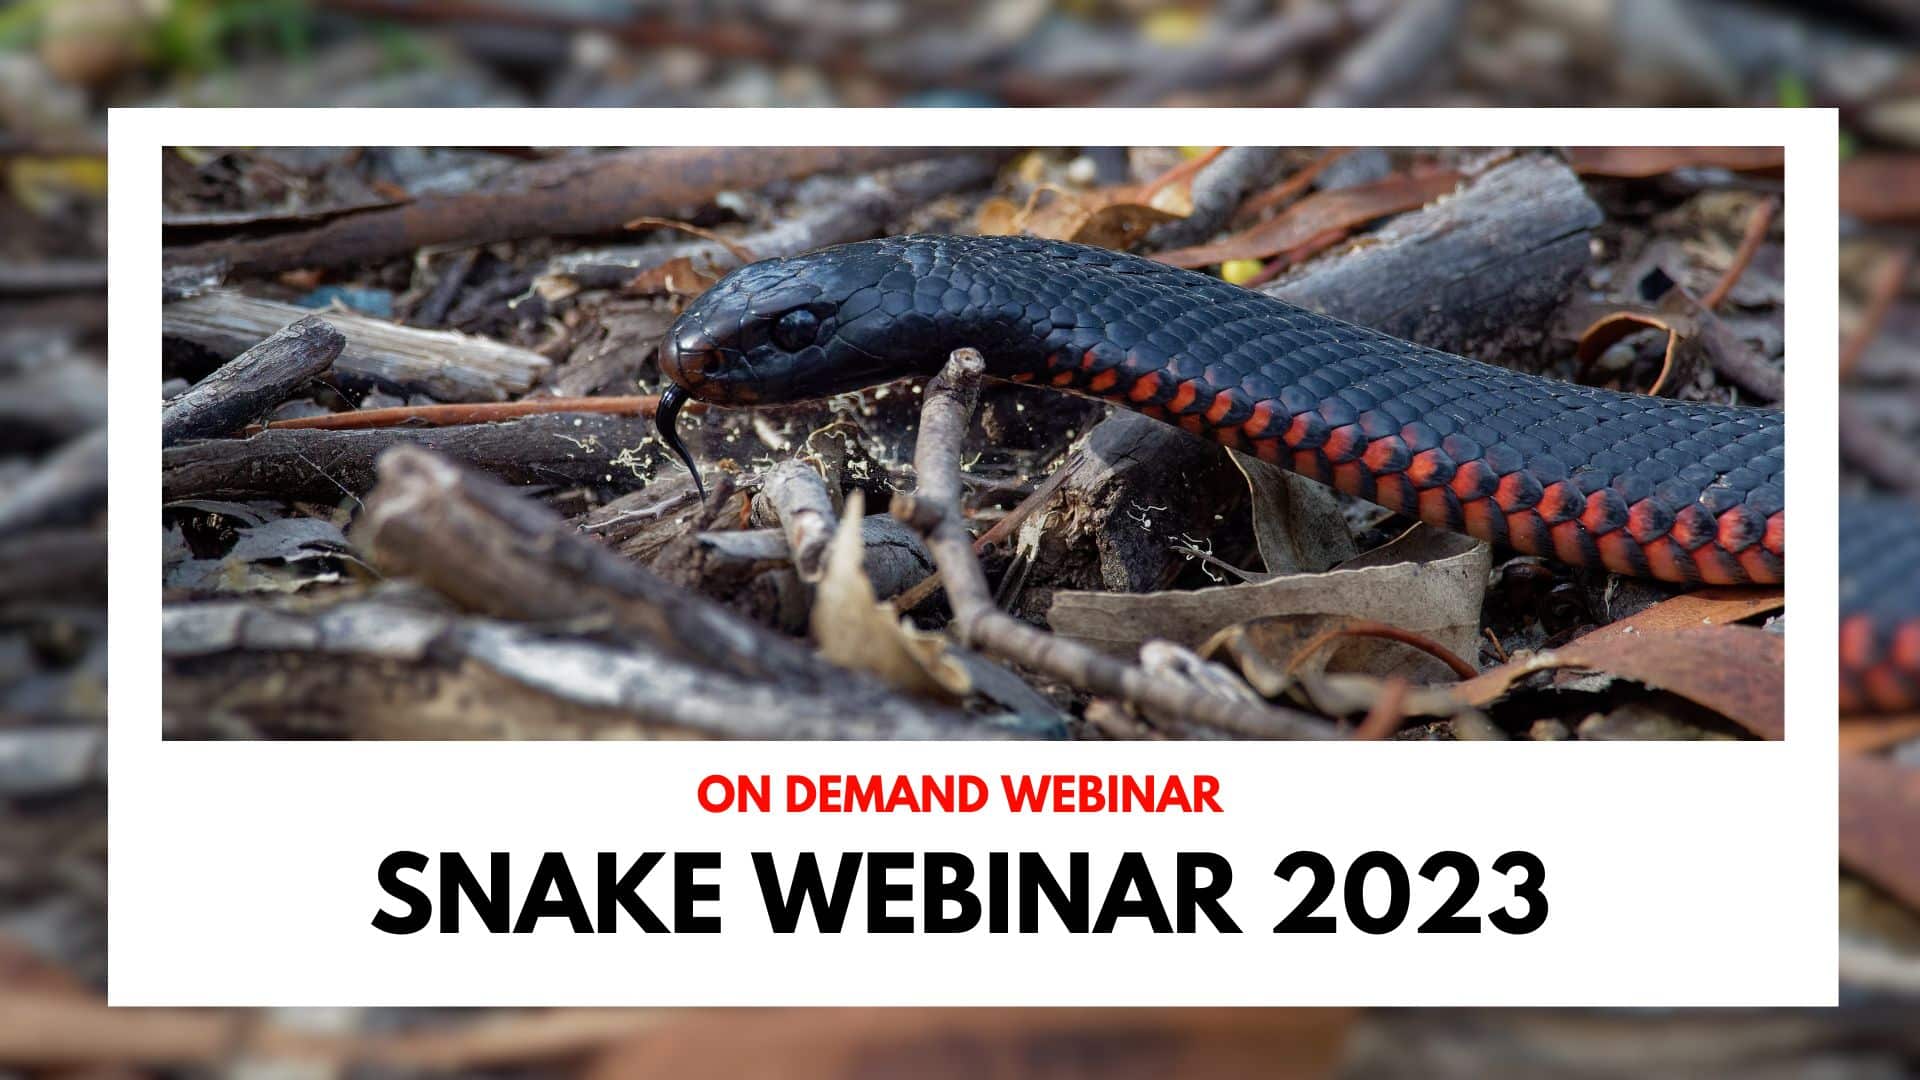 Snake Webinar animal emergency australia